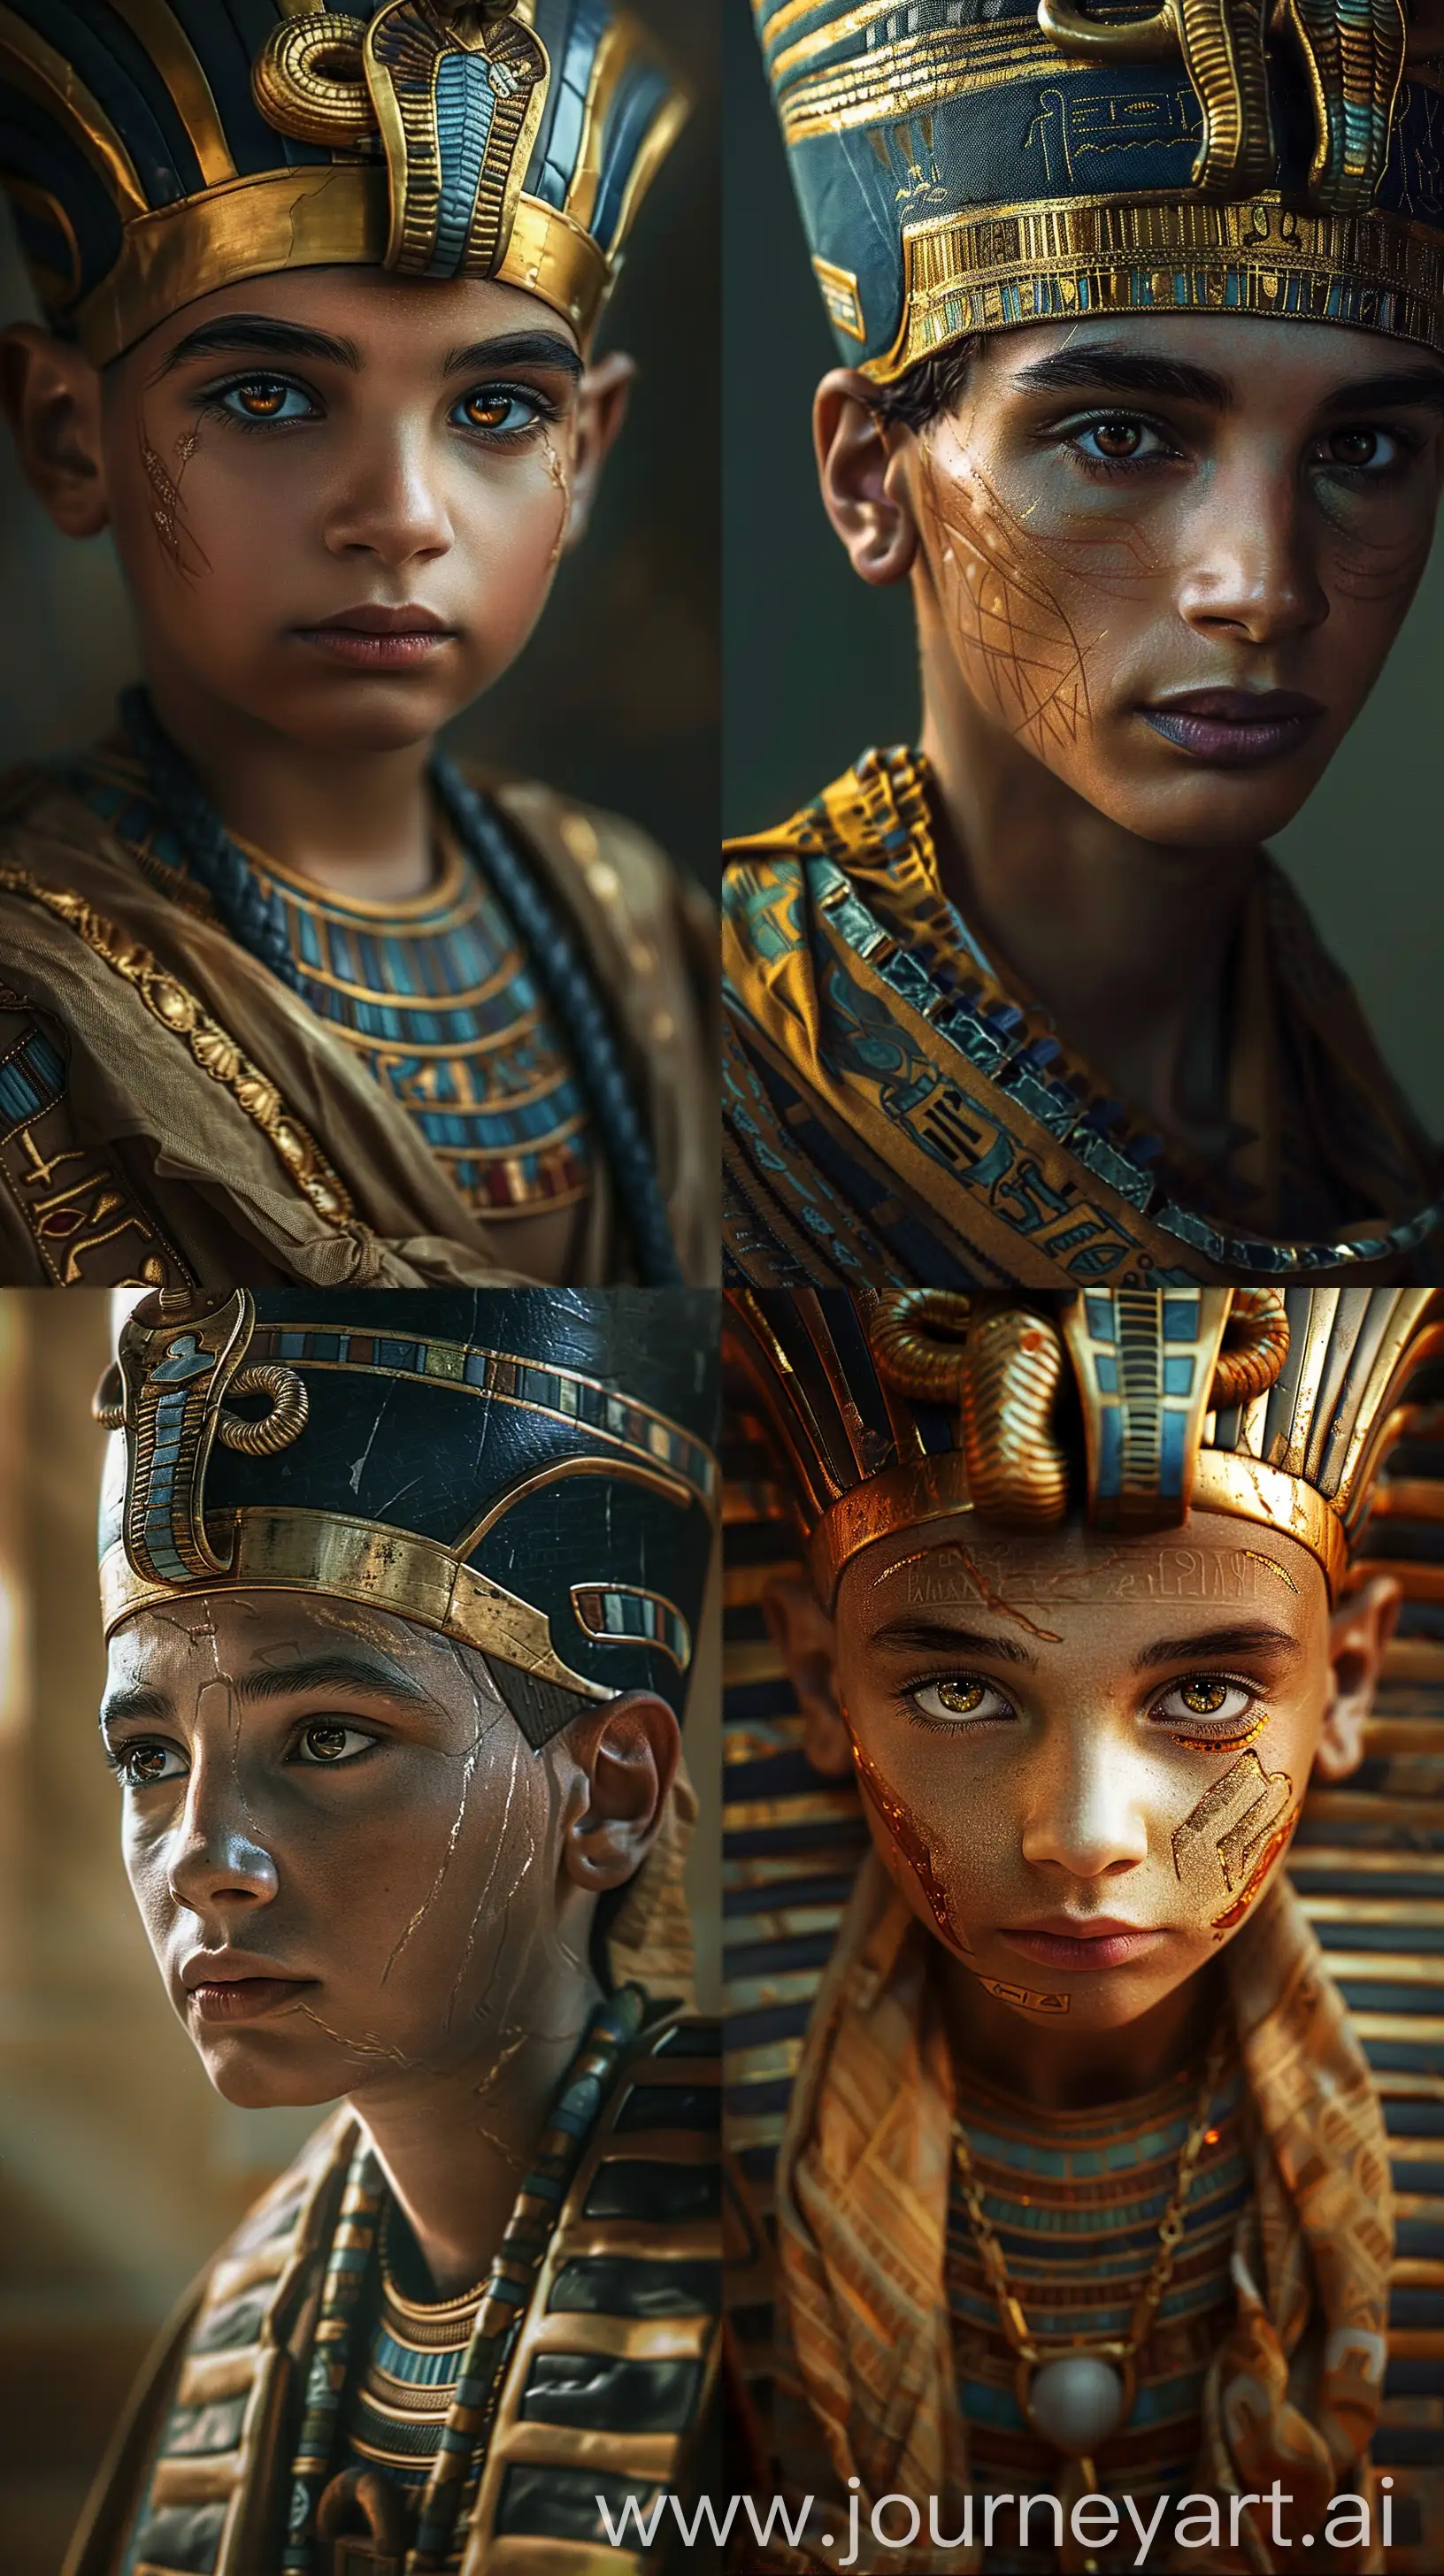 Dramatic-Portrait-of-Young-Pharaoh-Tutankhamun-in-Ancient-Egyptian-Attire